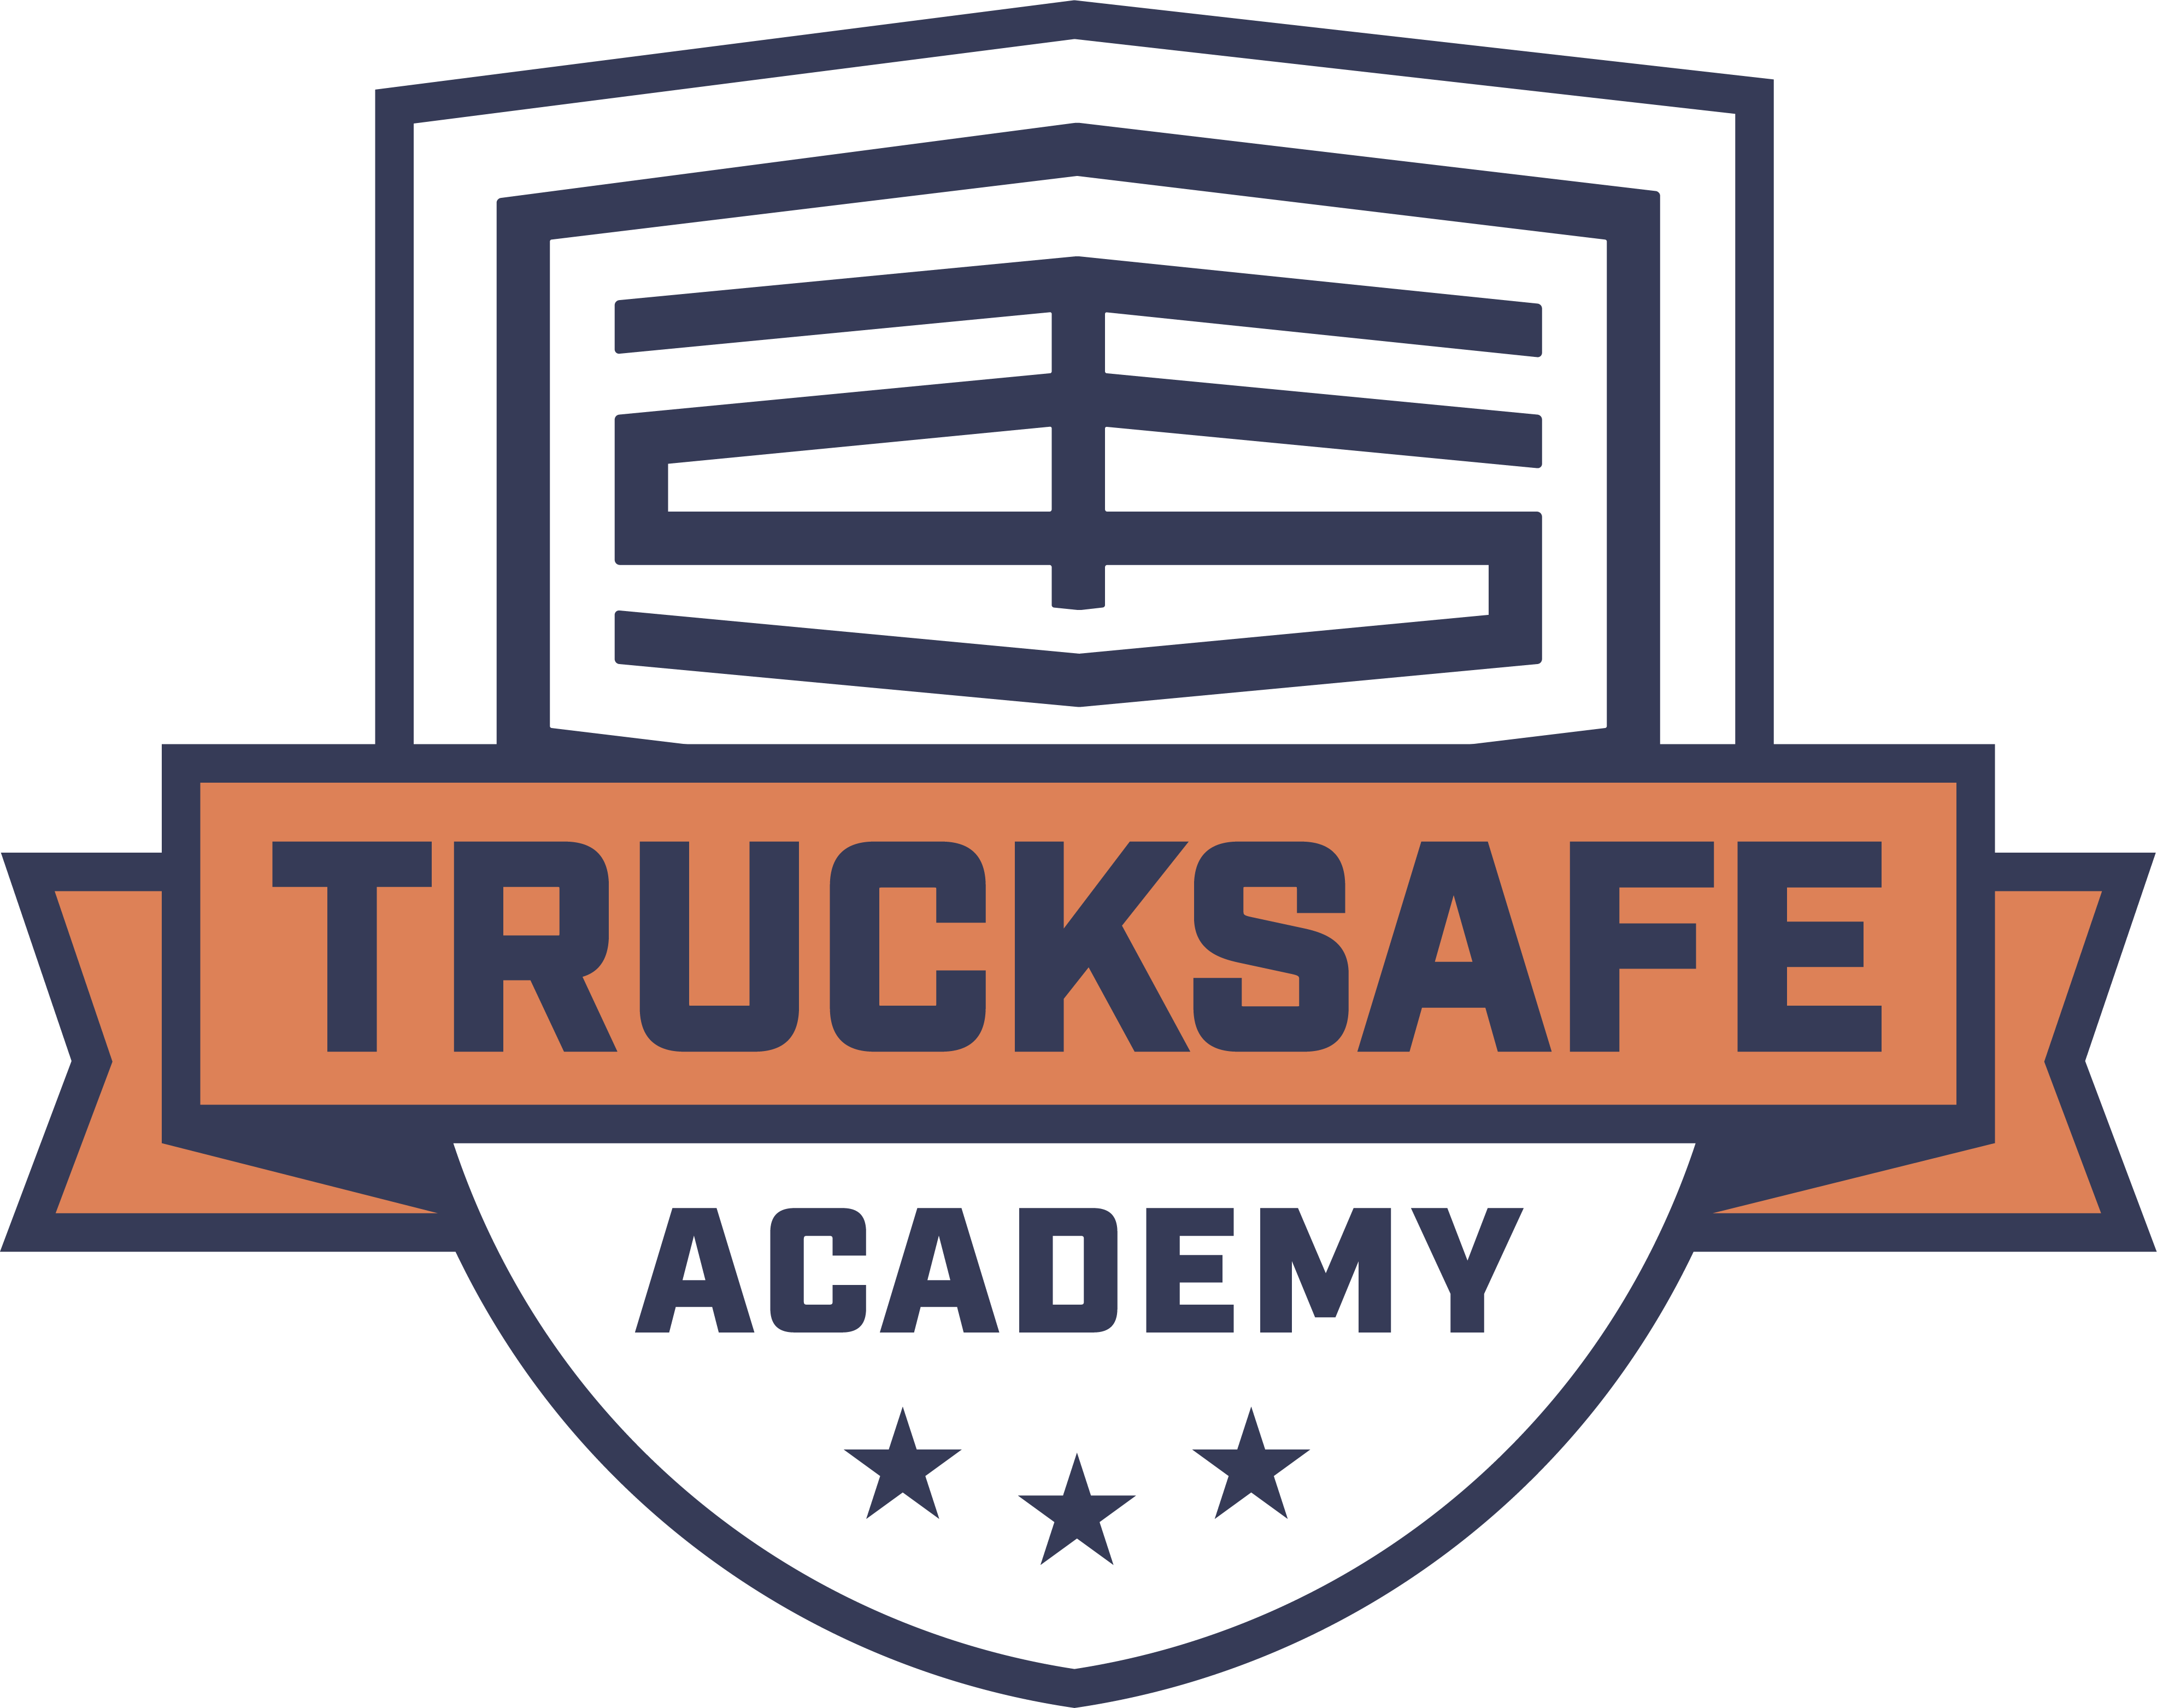 Truck safe academy logo, dot compliance training